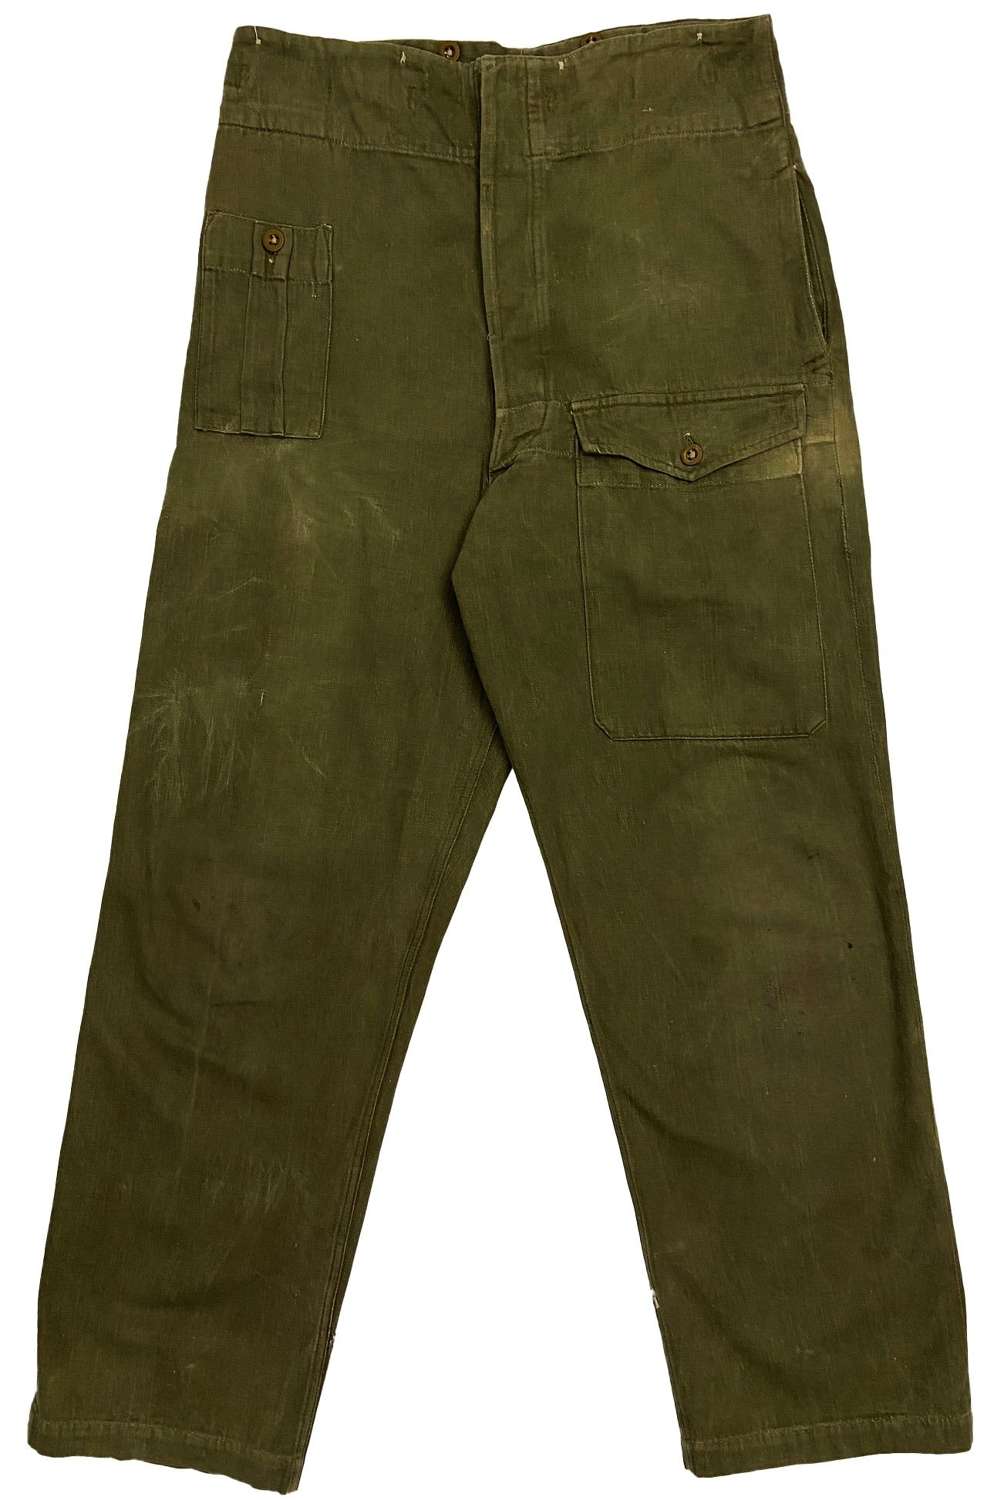 Original 1955 Dated British Denim Battledress Trousers - Size 5